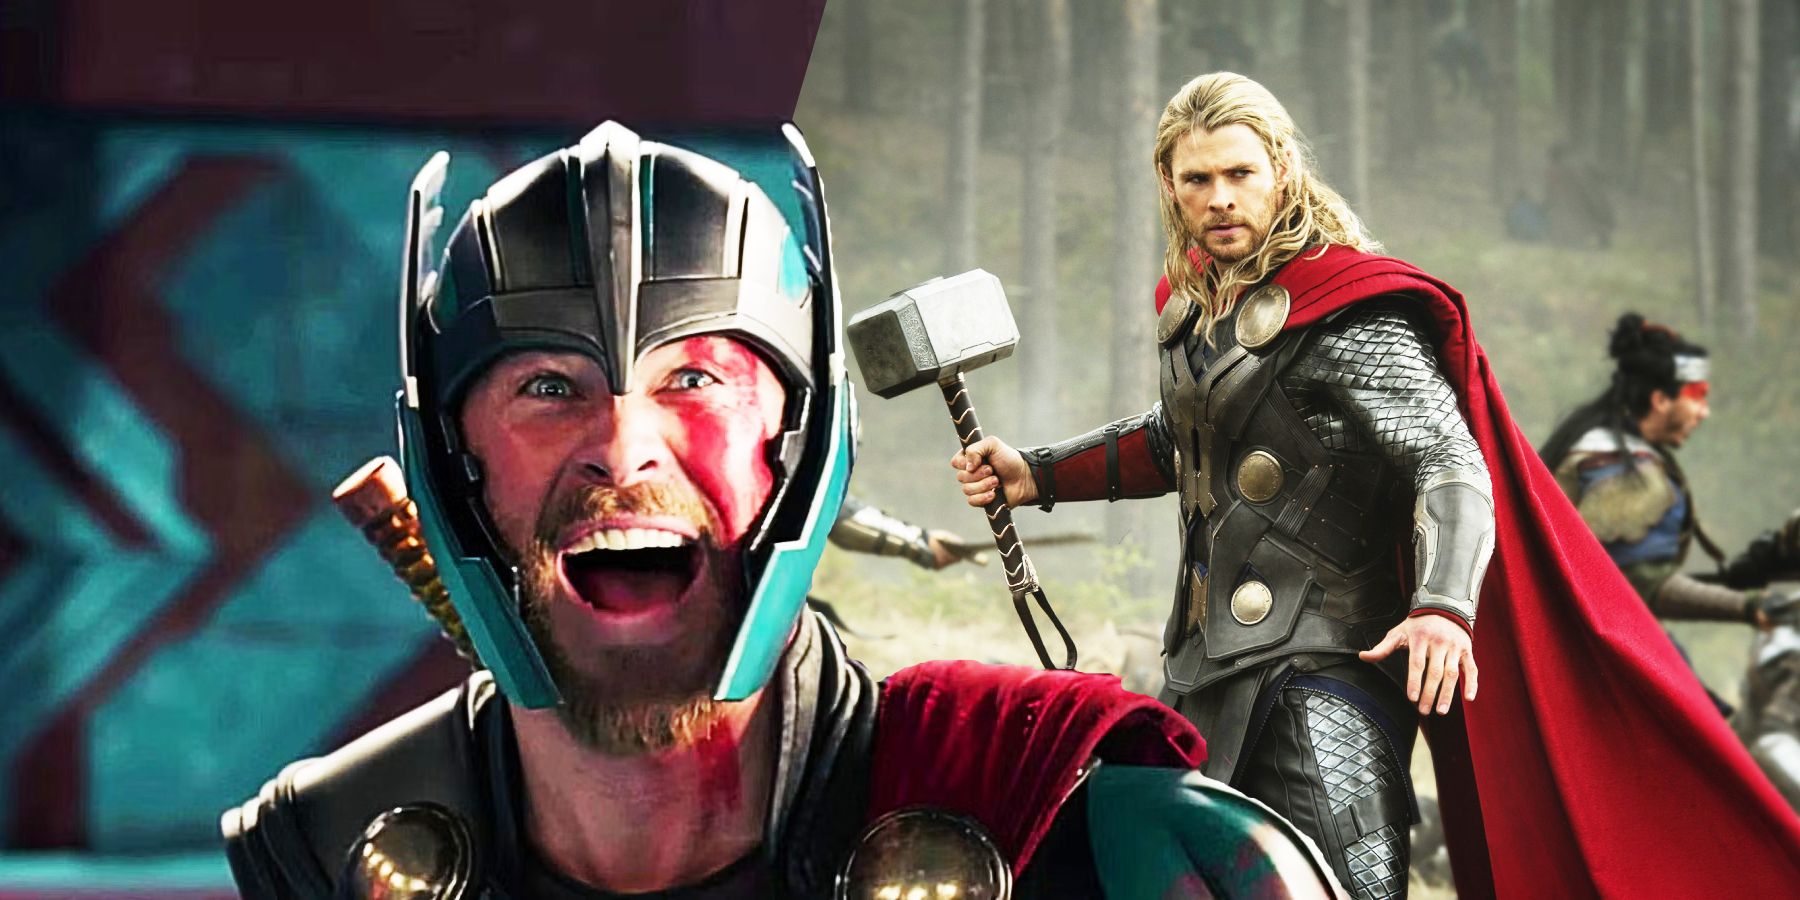 Thor: Ragnarok' takes us to a weirder, goofier corner of the